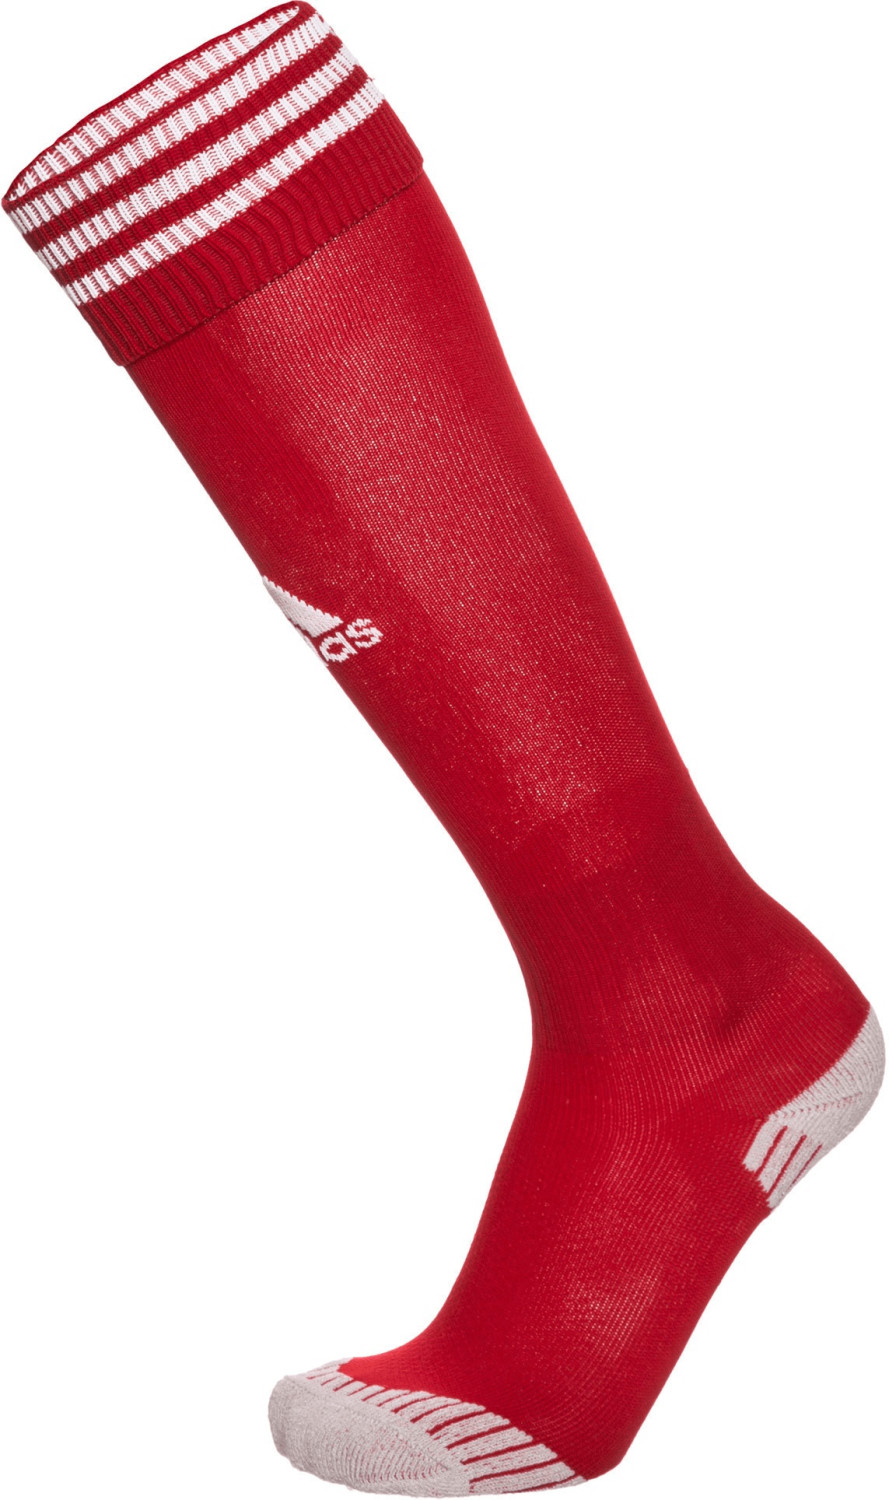 Adidas Adisocks 12 Football Socks university red/white